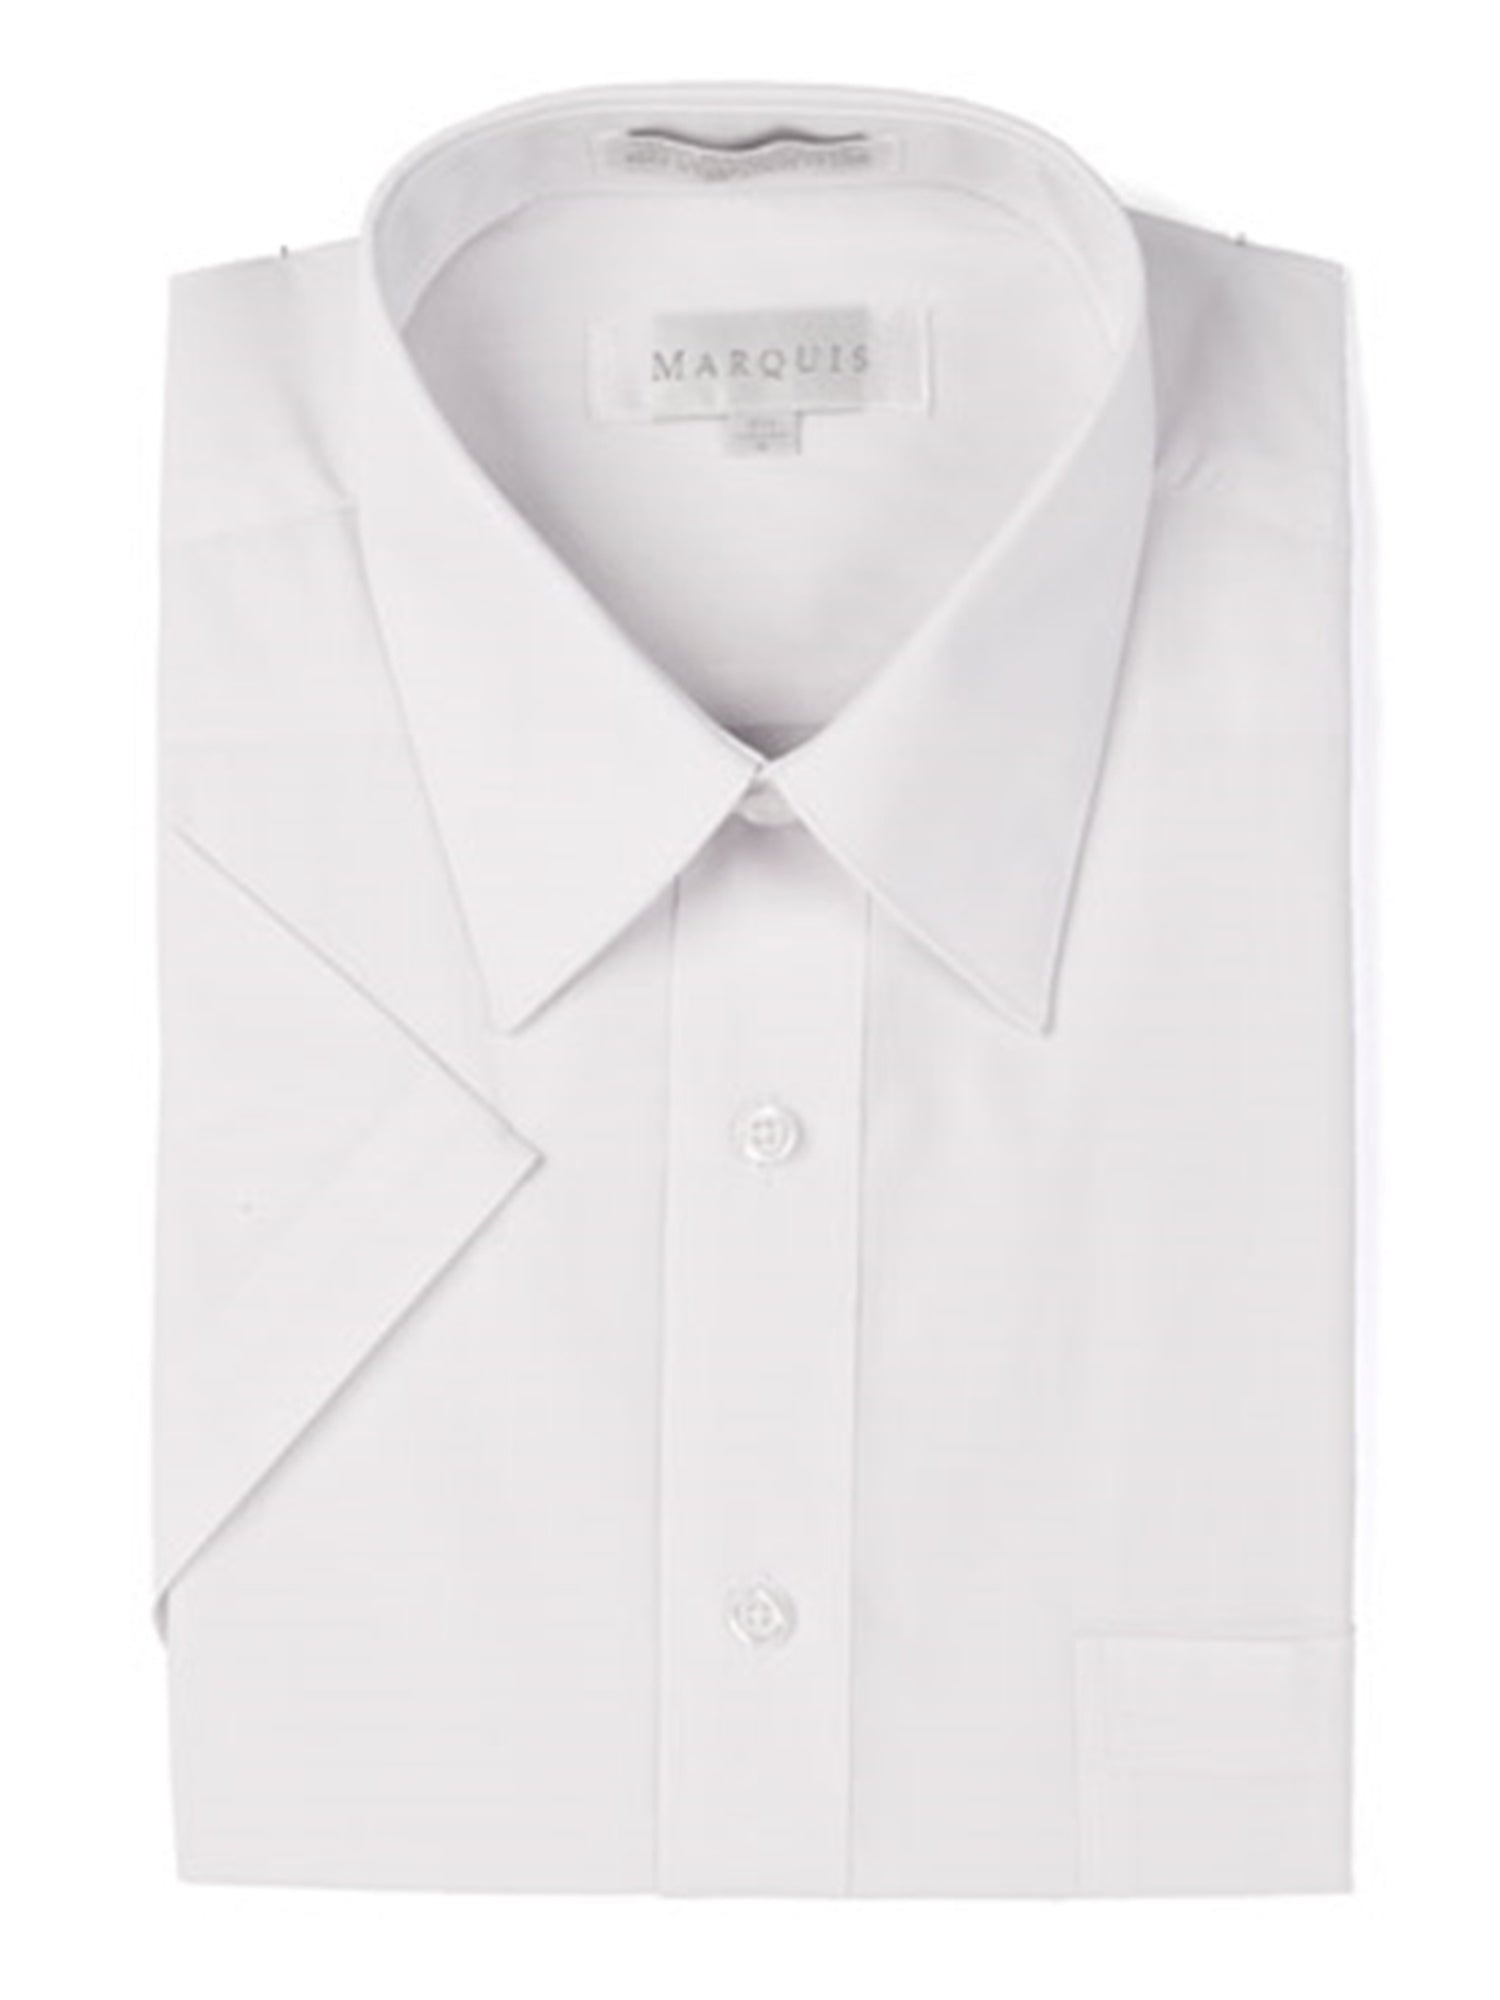 Marquis Men's Short Sleeve Regular Fit Dress Shirt - S To 4XL Men's Dress Shirts Marquis White Small/14.5 